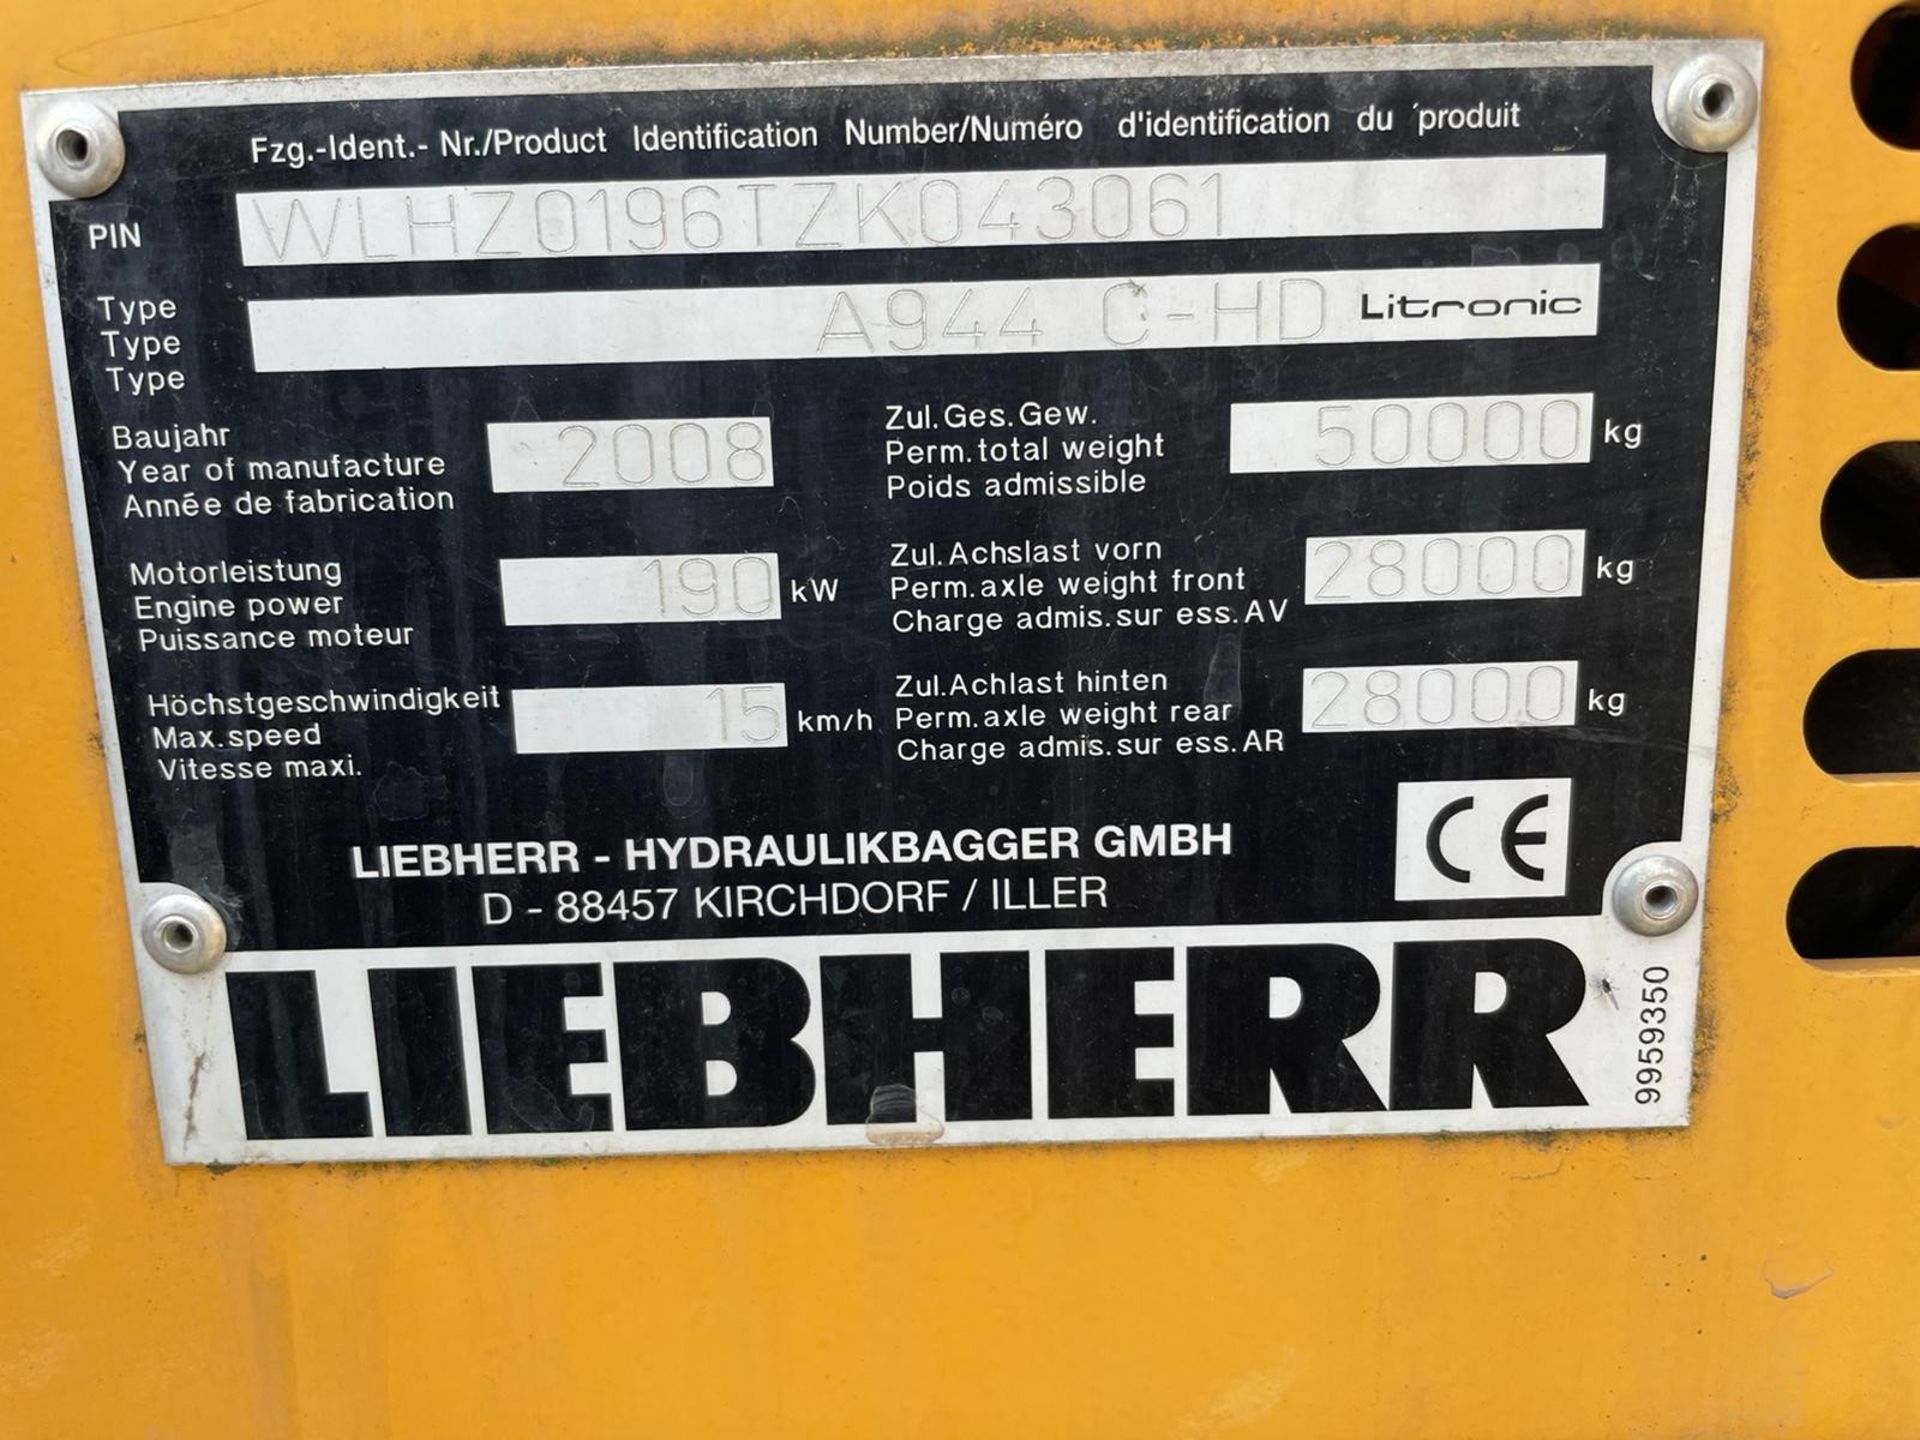 Liebherr scrap / waste handler 944C 2008 - Image 9 of 9